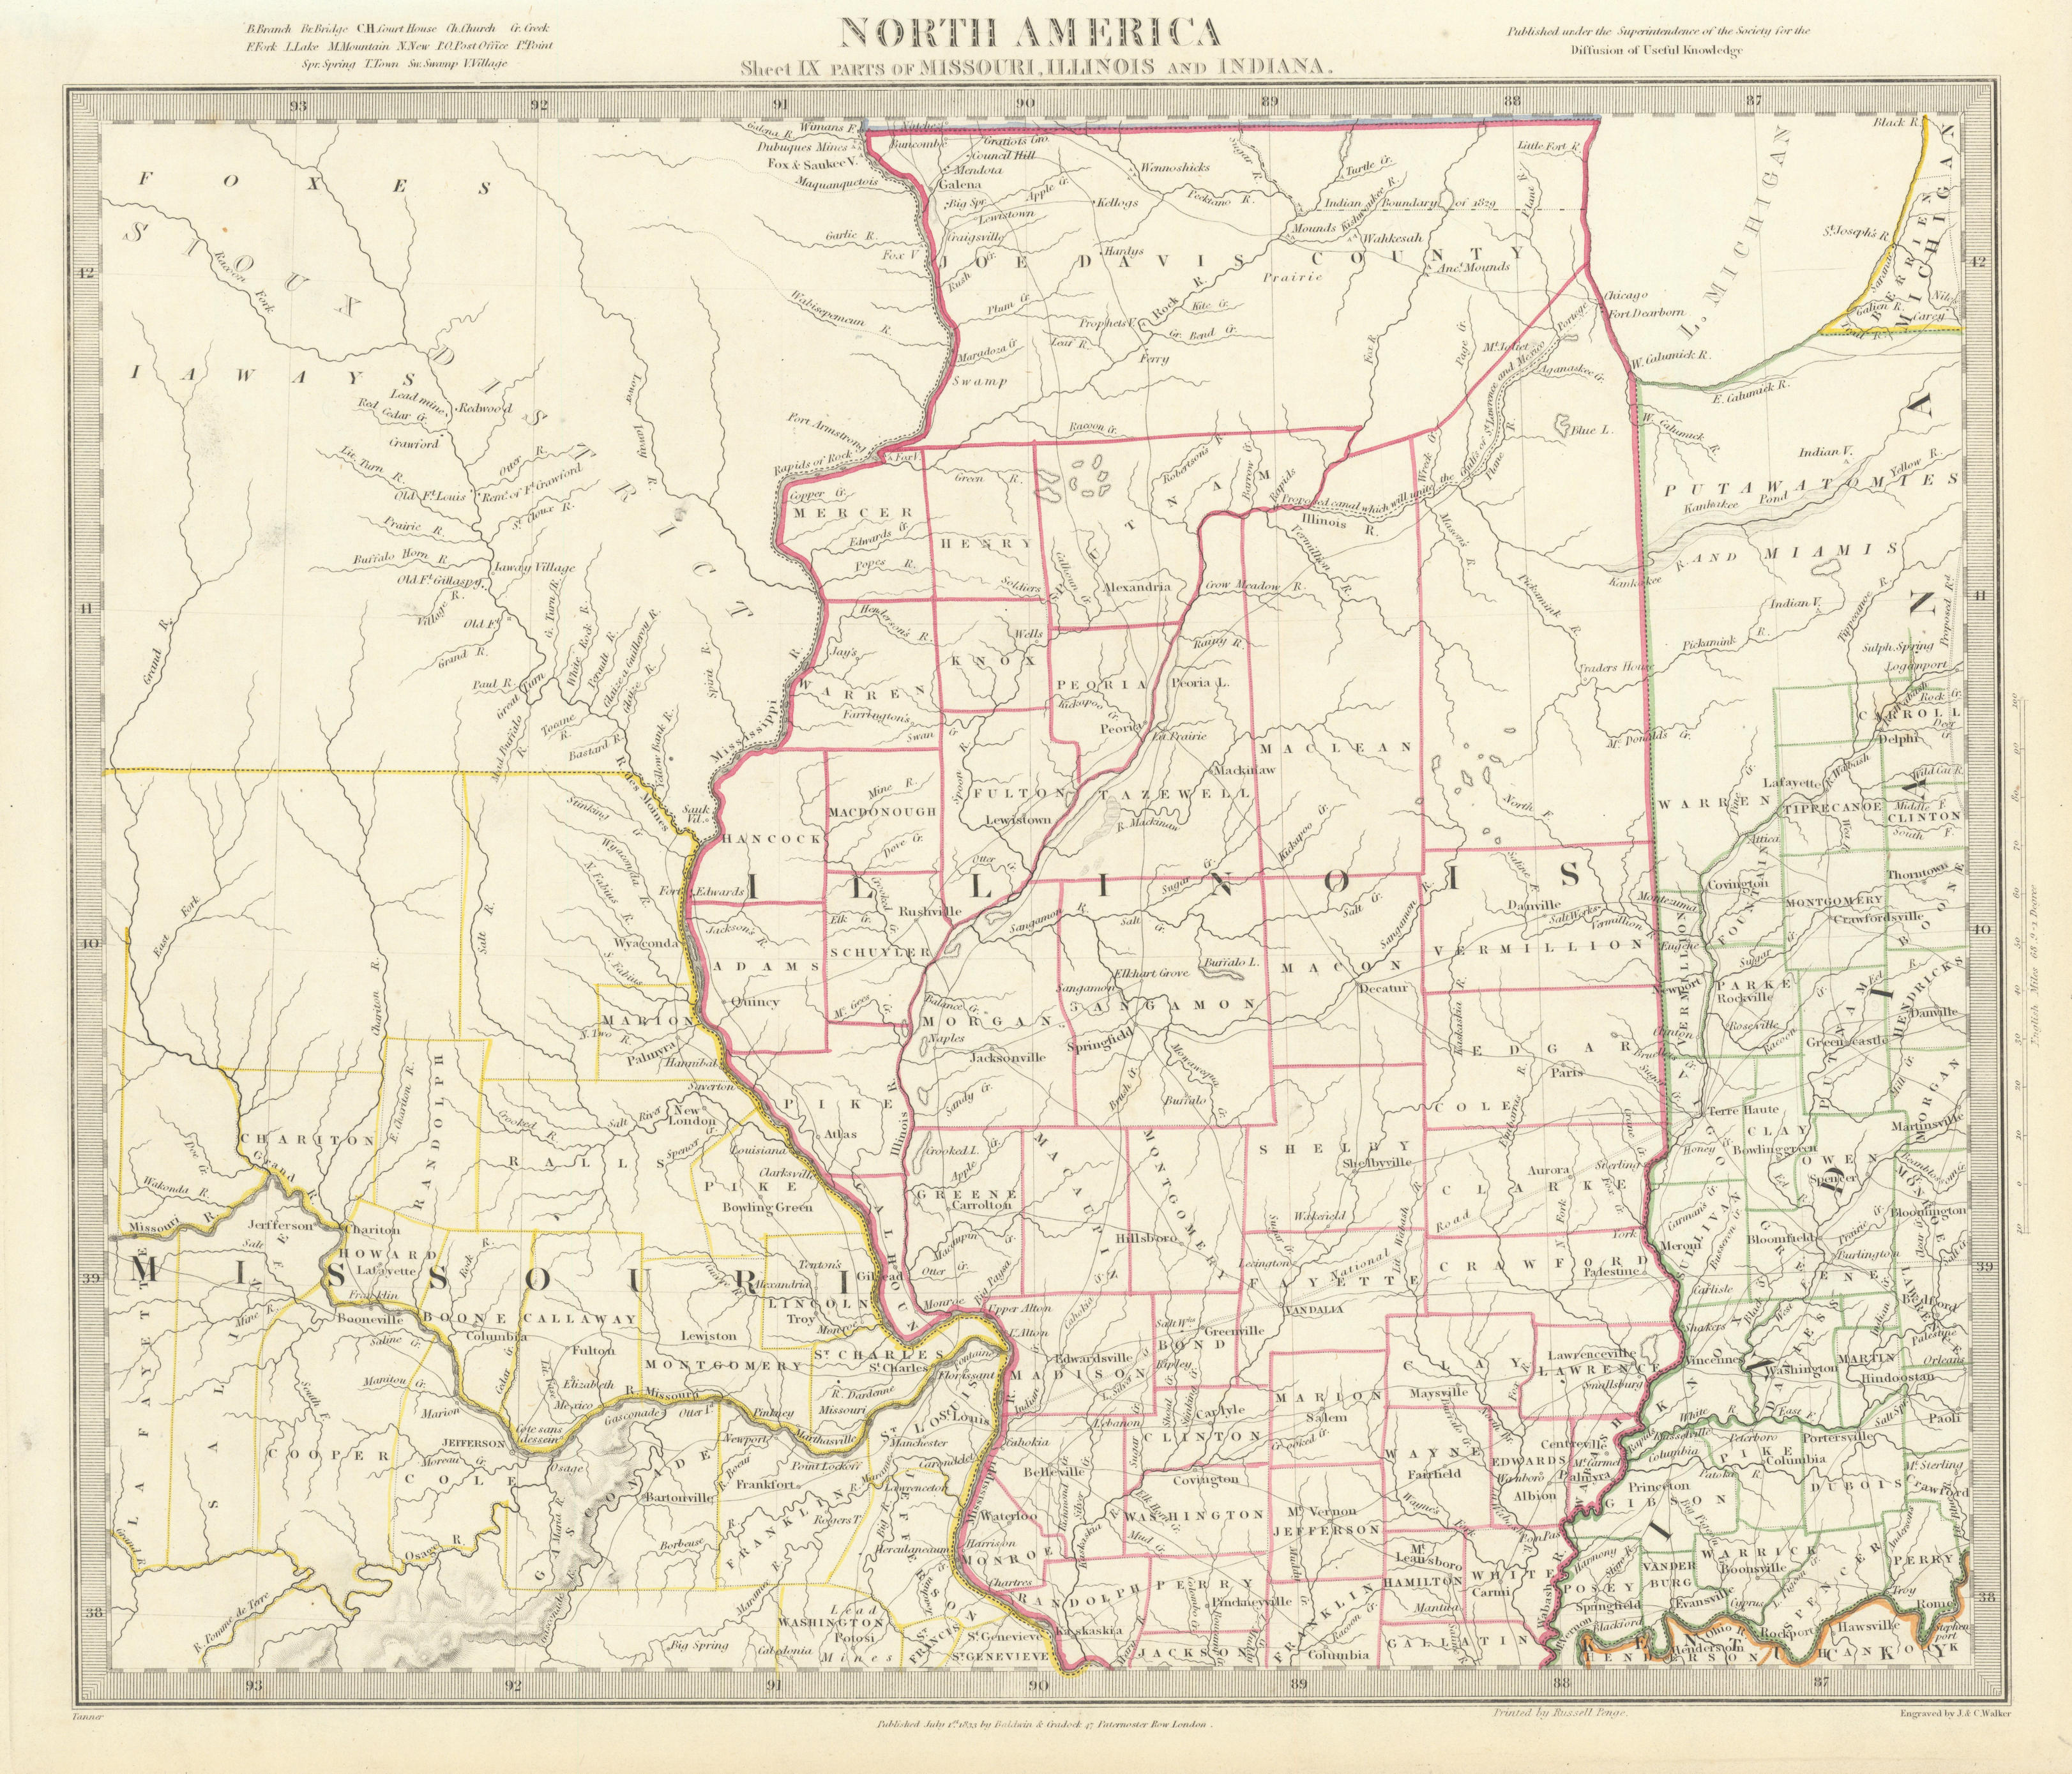 USA. Missouri Illinois Indiana. Indian tribes villages borders. SDUK 1844 map